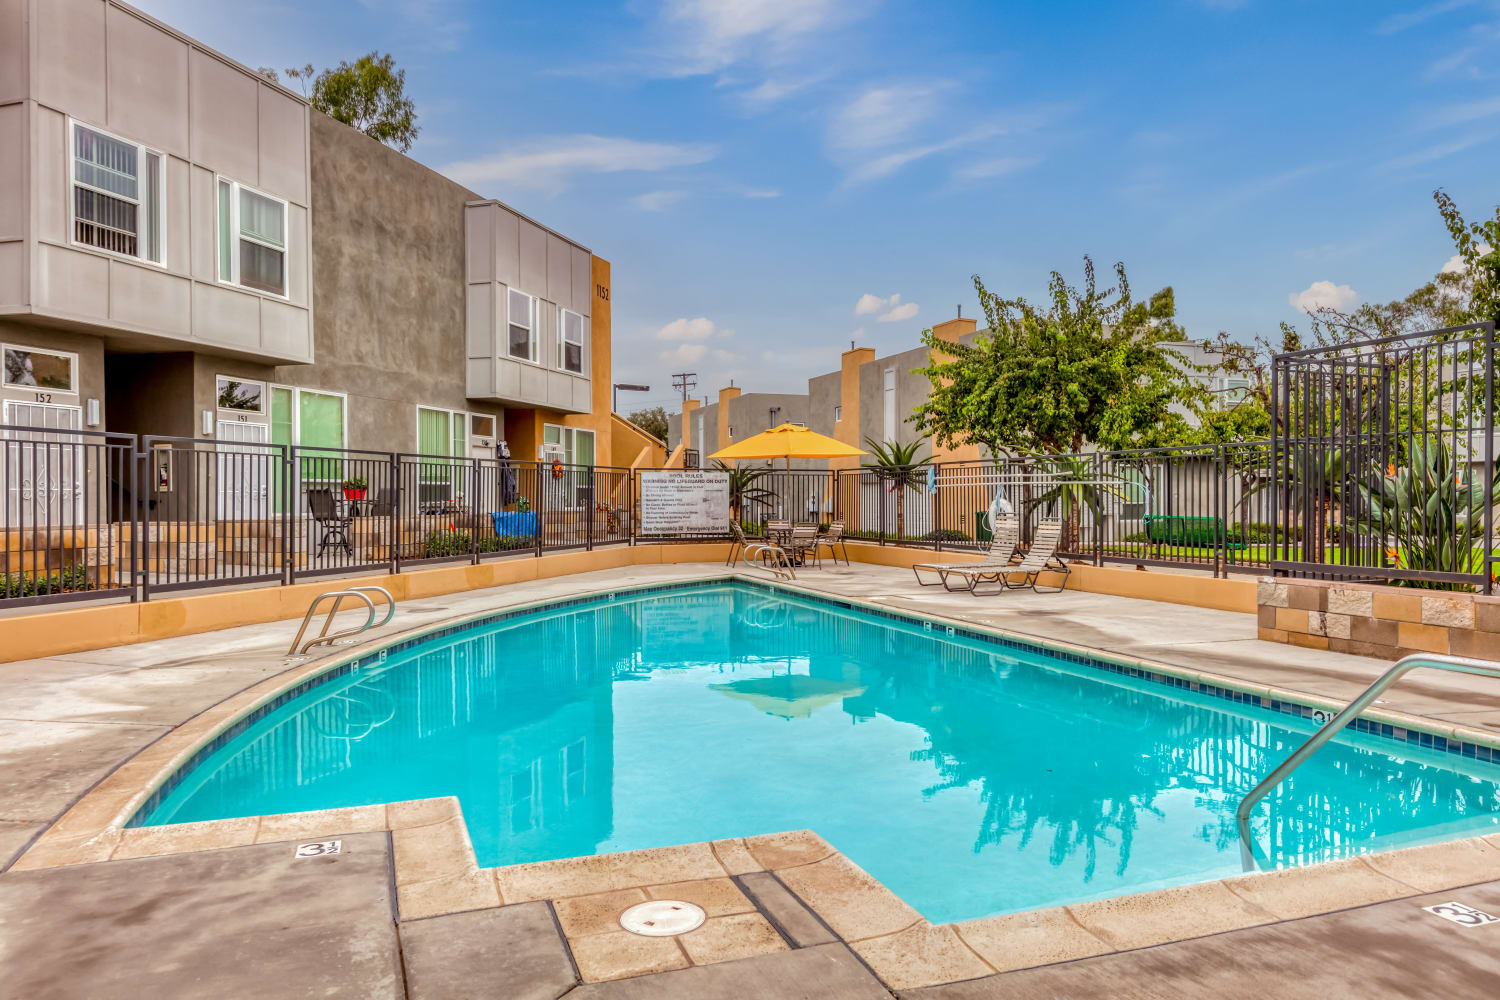 Tesoro Grove Apartments apartments in San Diego, California